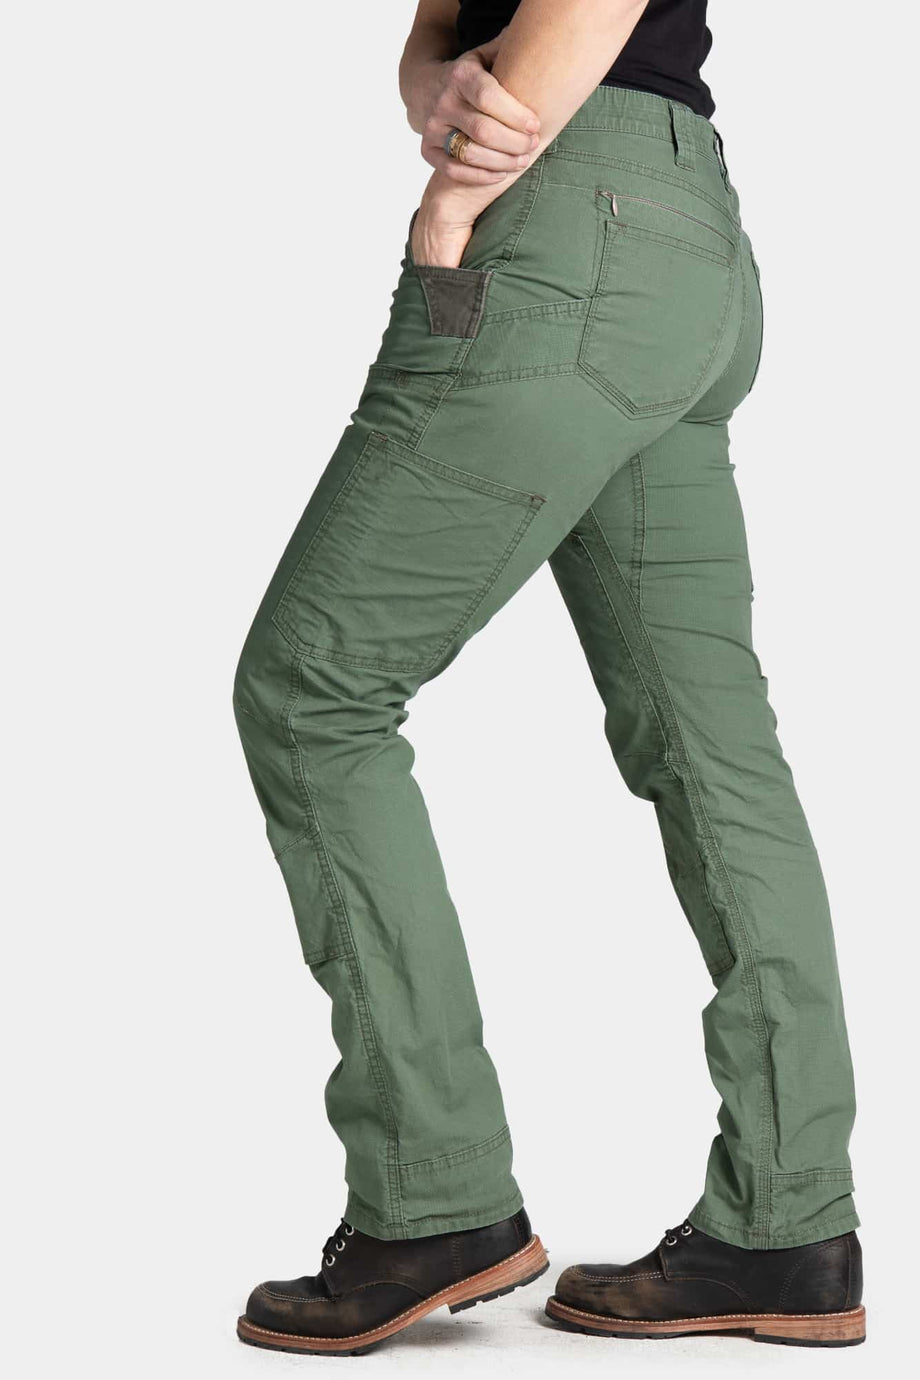 X Light – in Britt Ripstop Lichen Dovetail Workwear Ultra Green